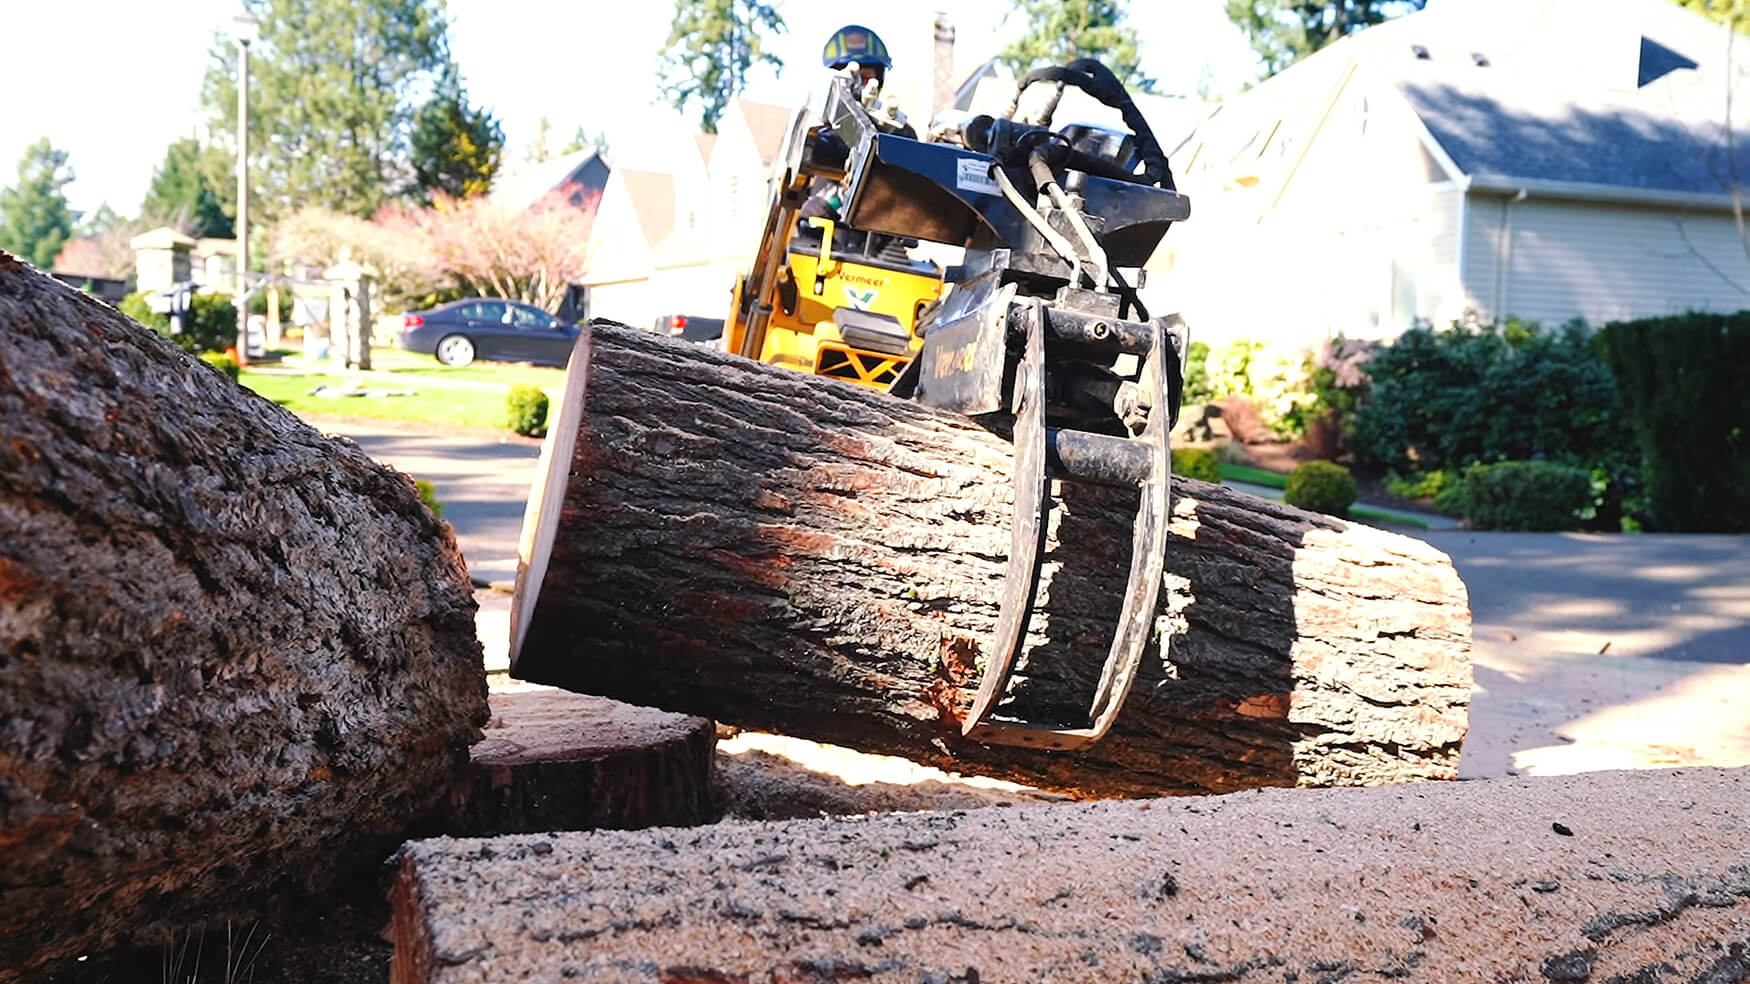 Smart Tree Service provides council-crest yard debris removal services